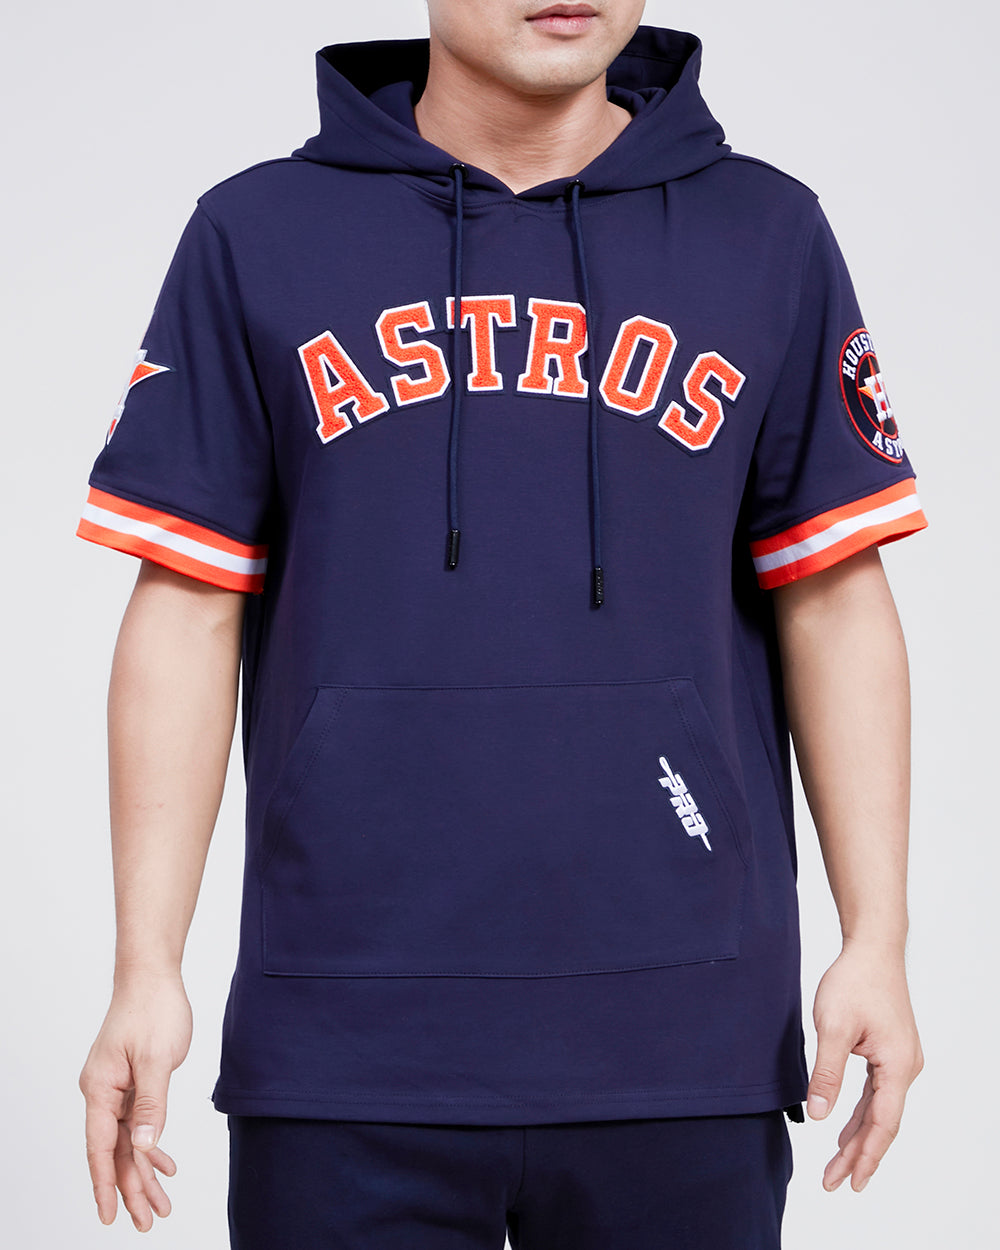 Men's Mitchell & Ness Orange/Navy Houston Astros Fleece Full-Zip Hoodie Size: Small